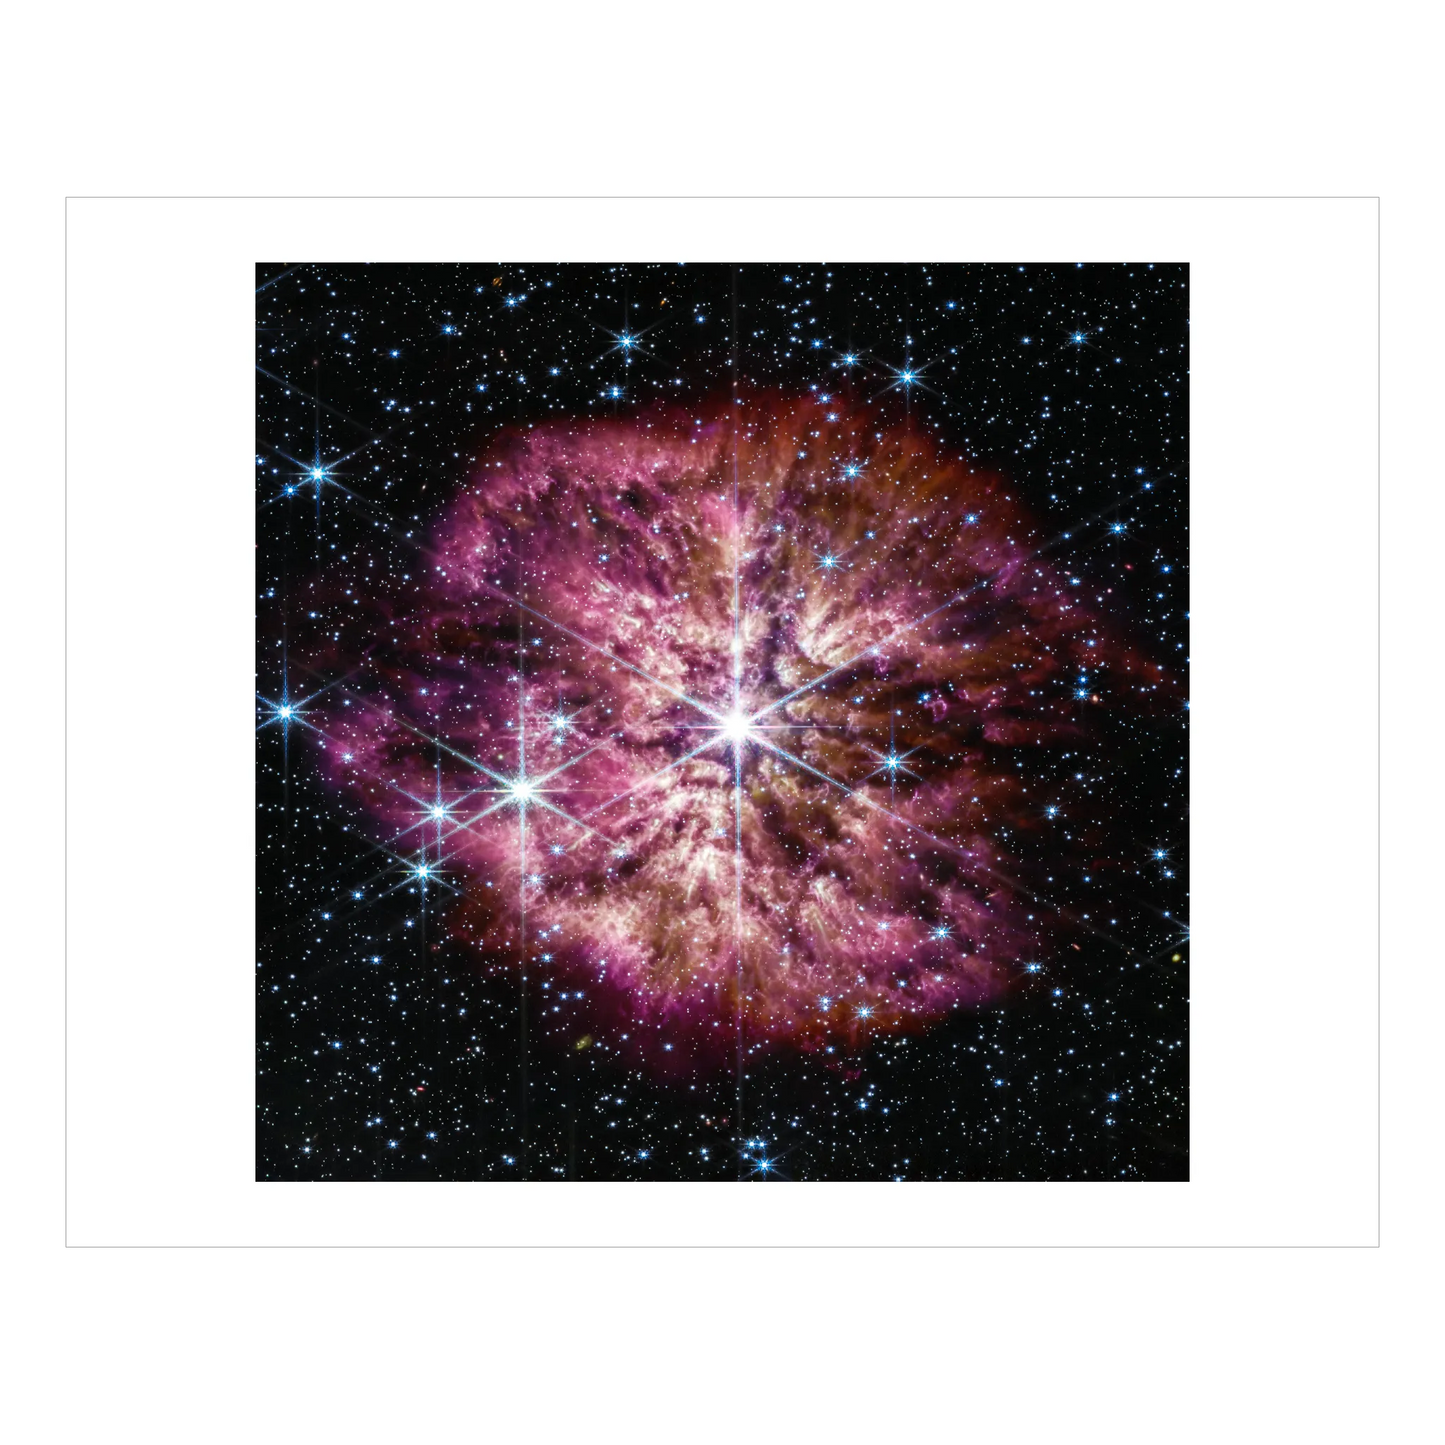 Rare Prelude to Supernova (NIRCam and MIRI Image)